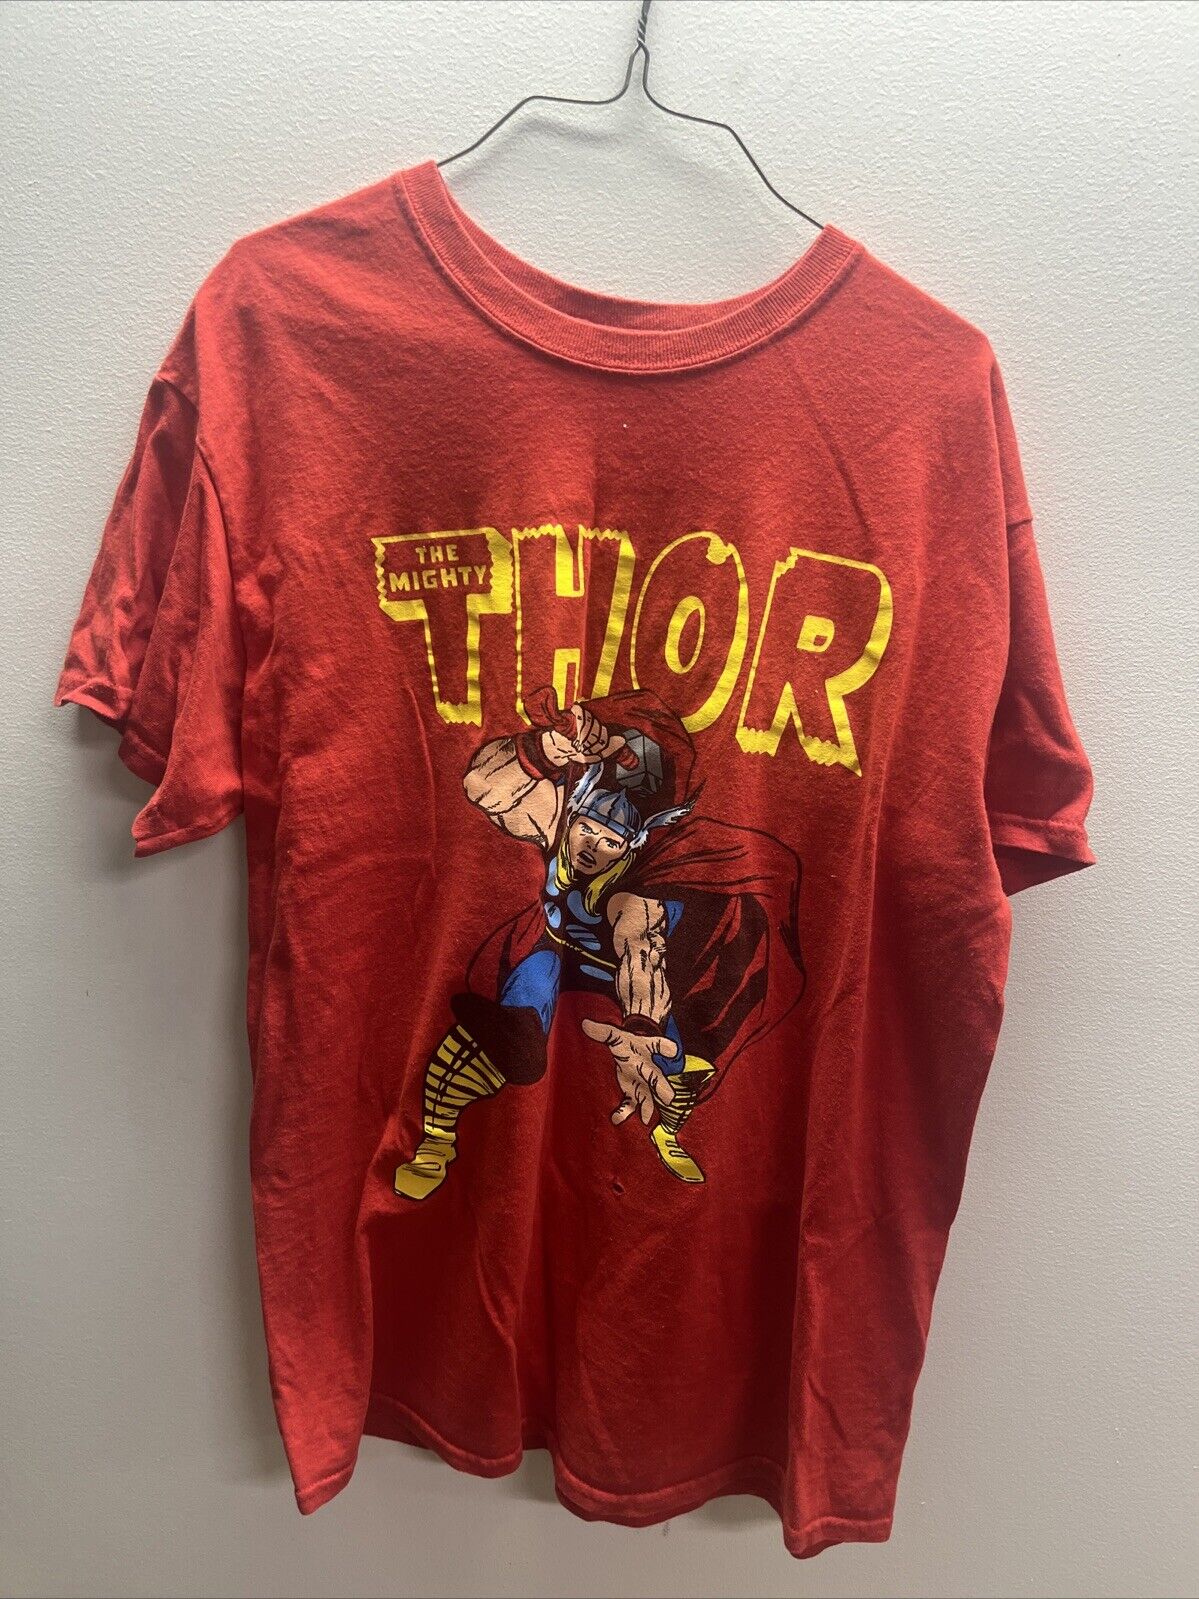 The Mighty Thor Adult Medium Portrait T-shirt